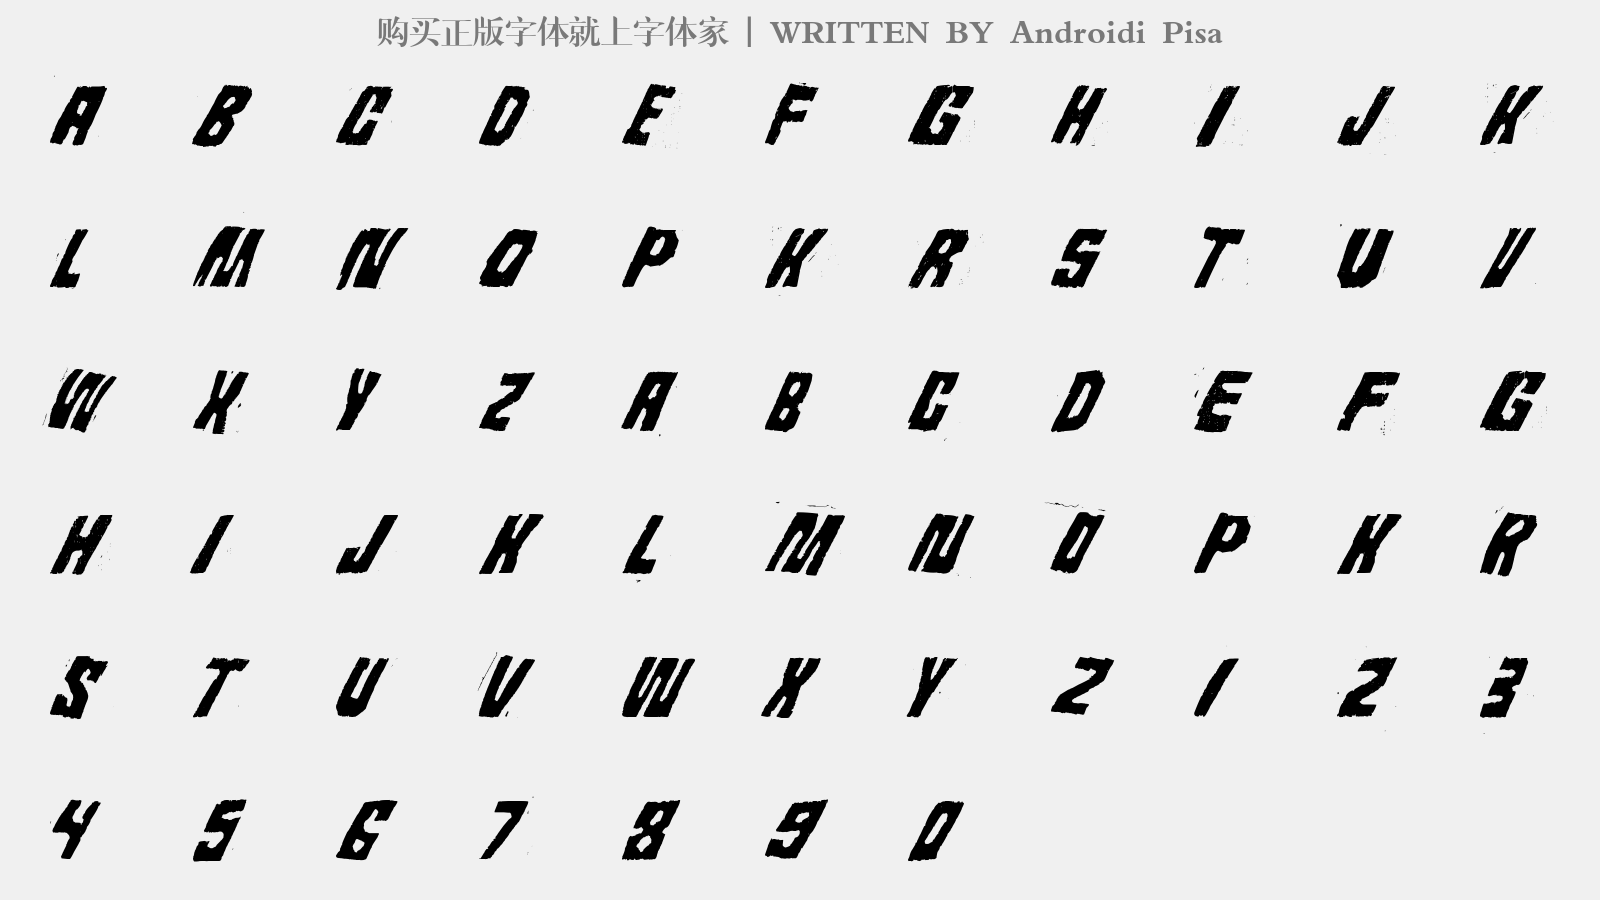 Androidi Pisa - 大写字母/小写字母/数字